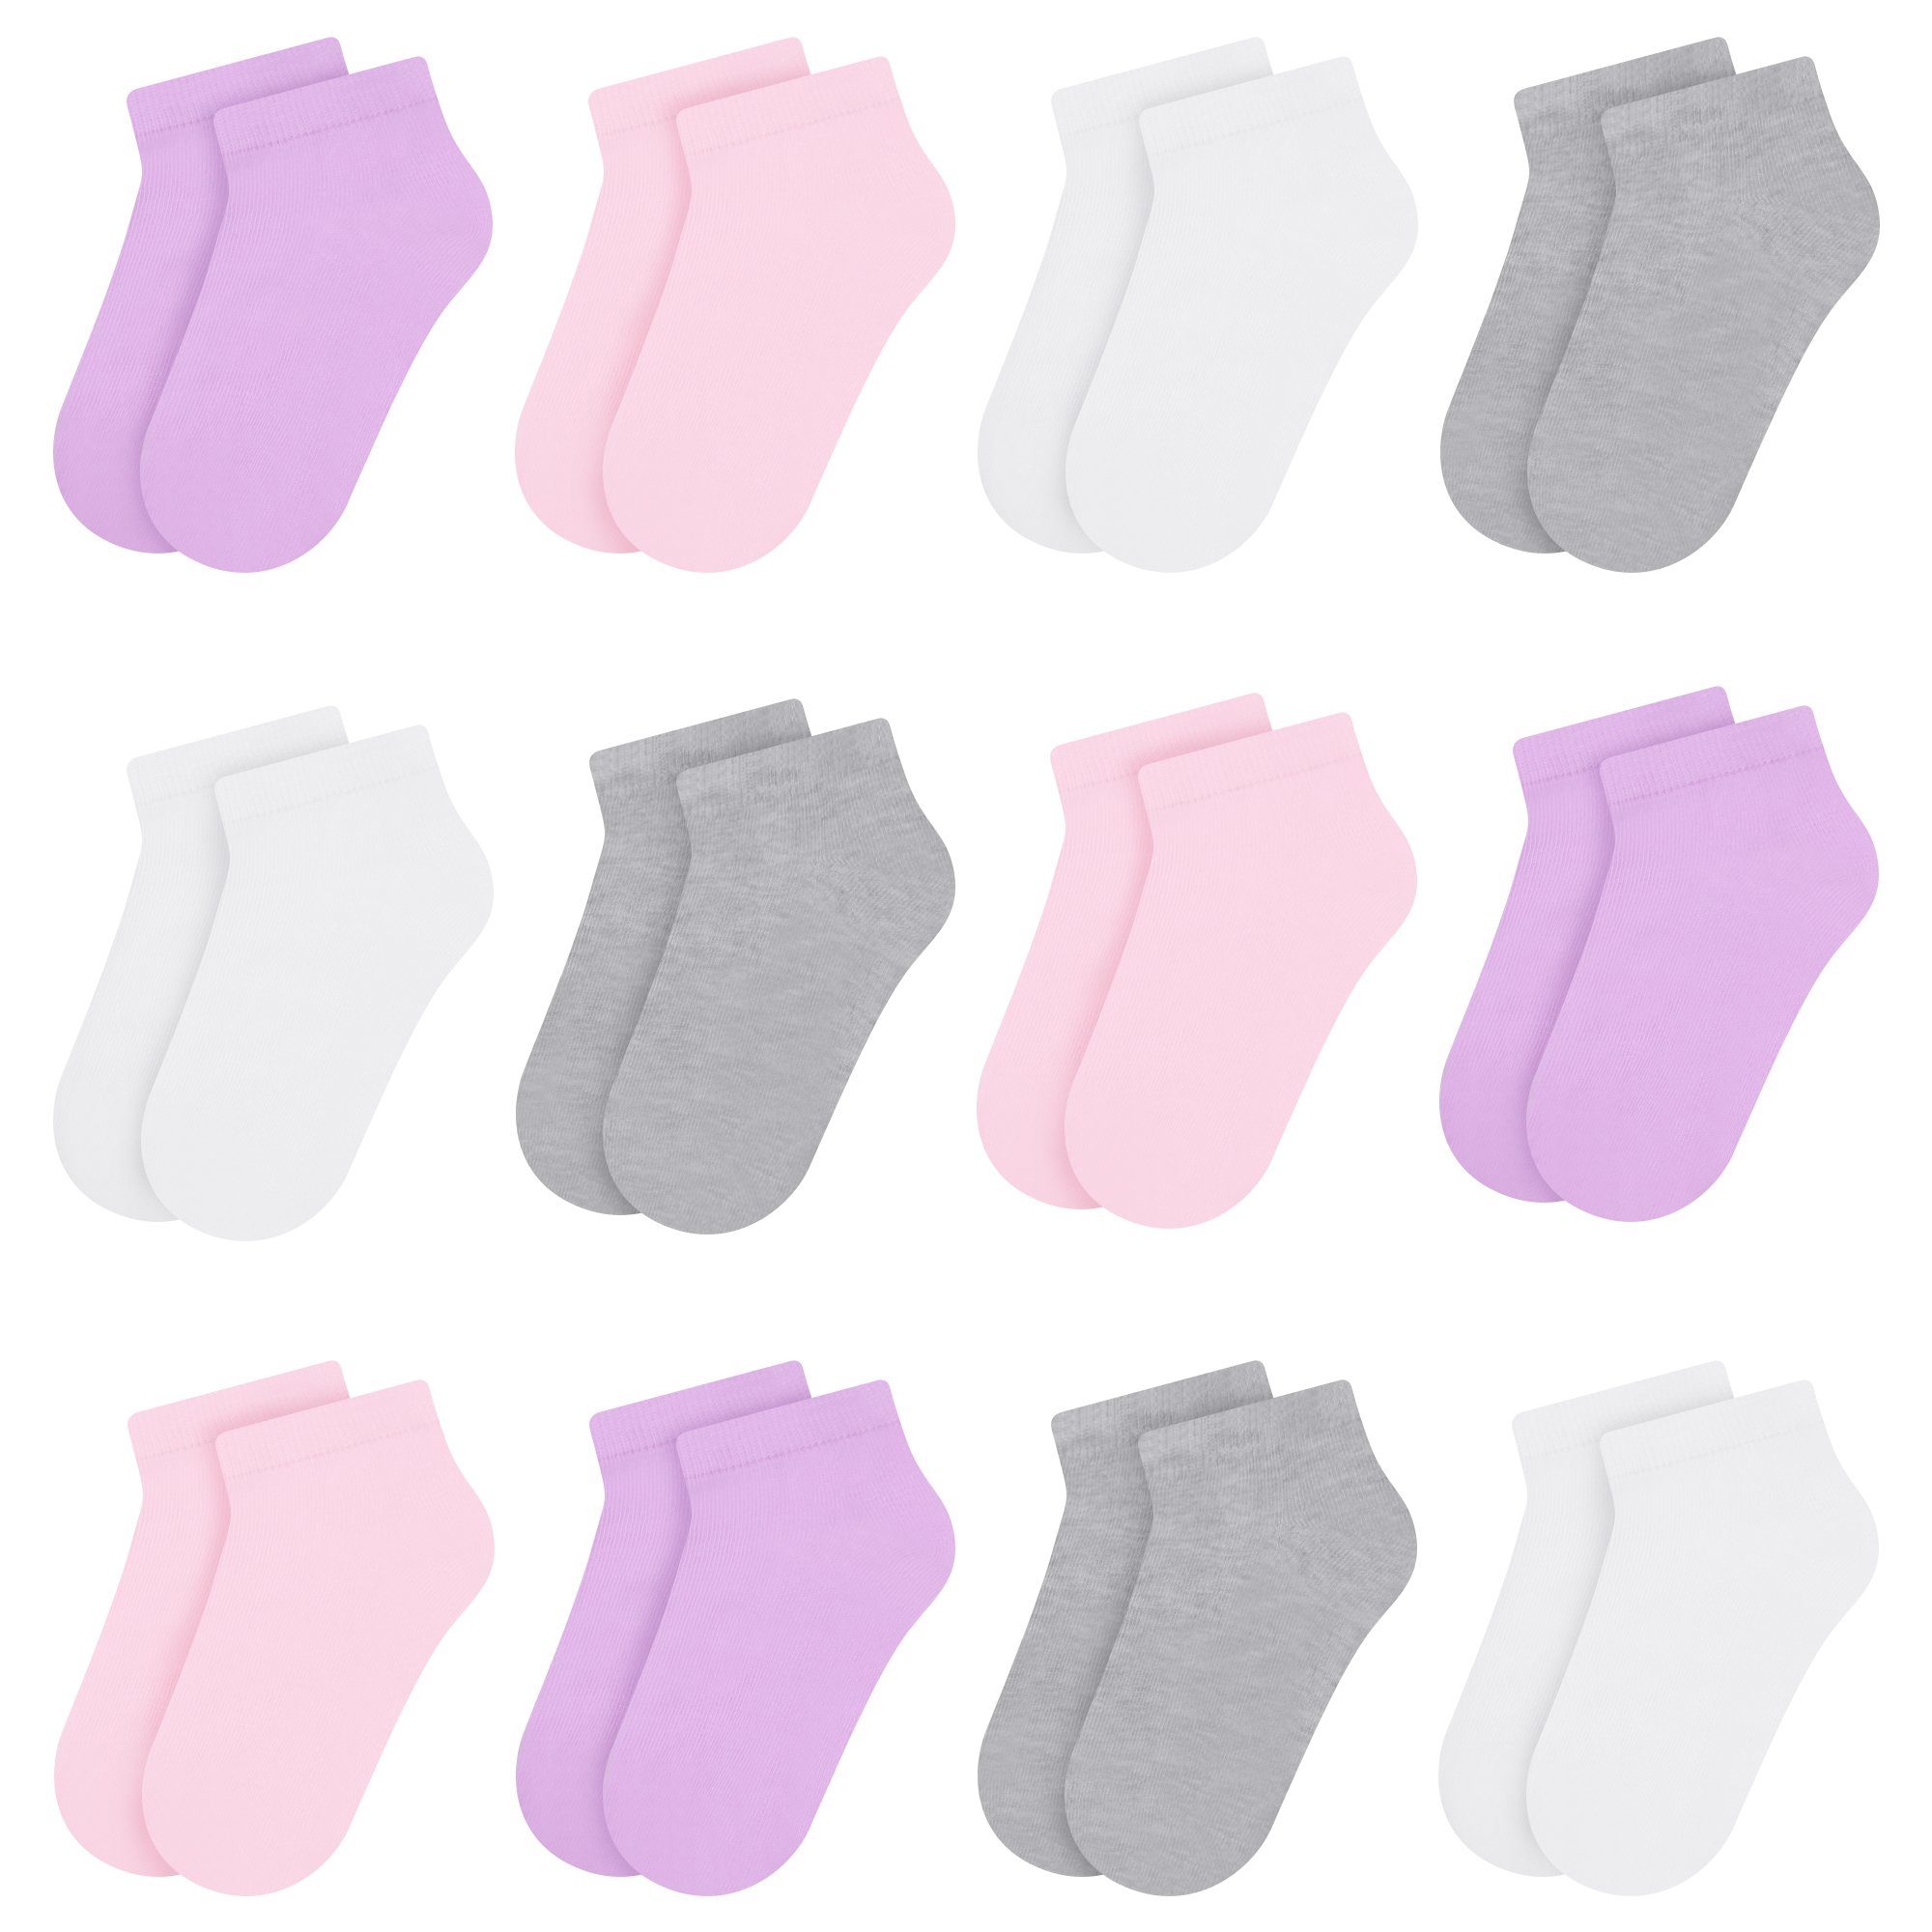 Socken L&K-II 2805 Mädchen 2118-2810 (Beutel, 10/12-Paar) Baumwolle aus Kurzsocken